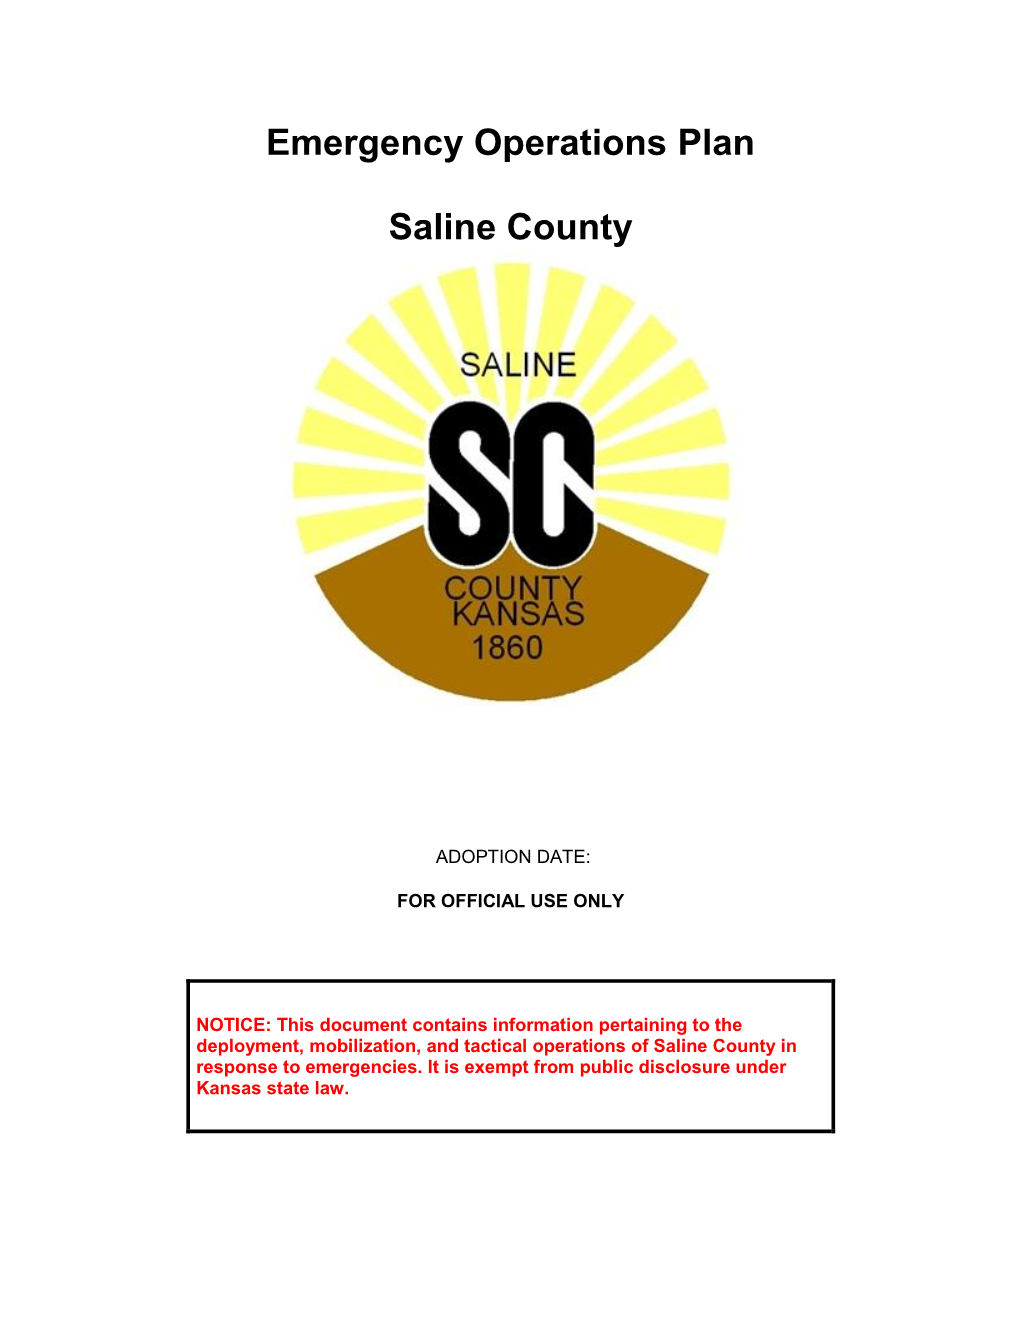 Saline County Emergency Operations Plan